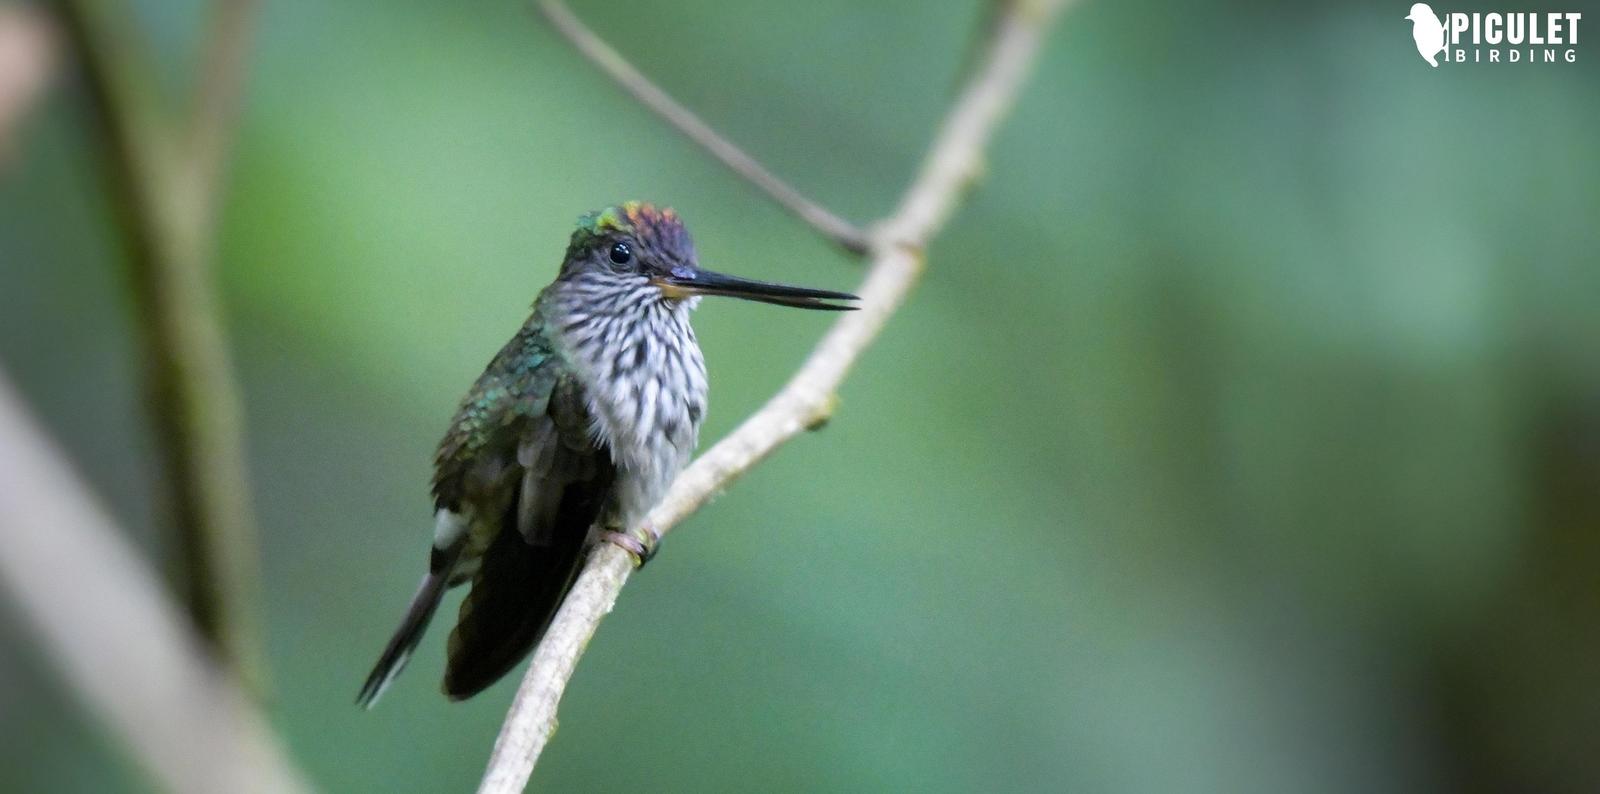 Tooth-billed Hummingbird Photo by Julio Delgado